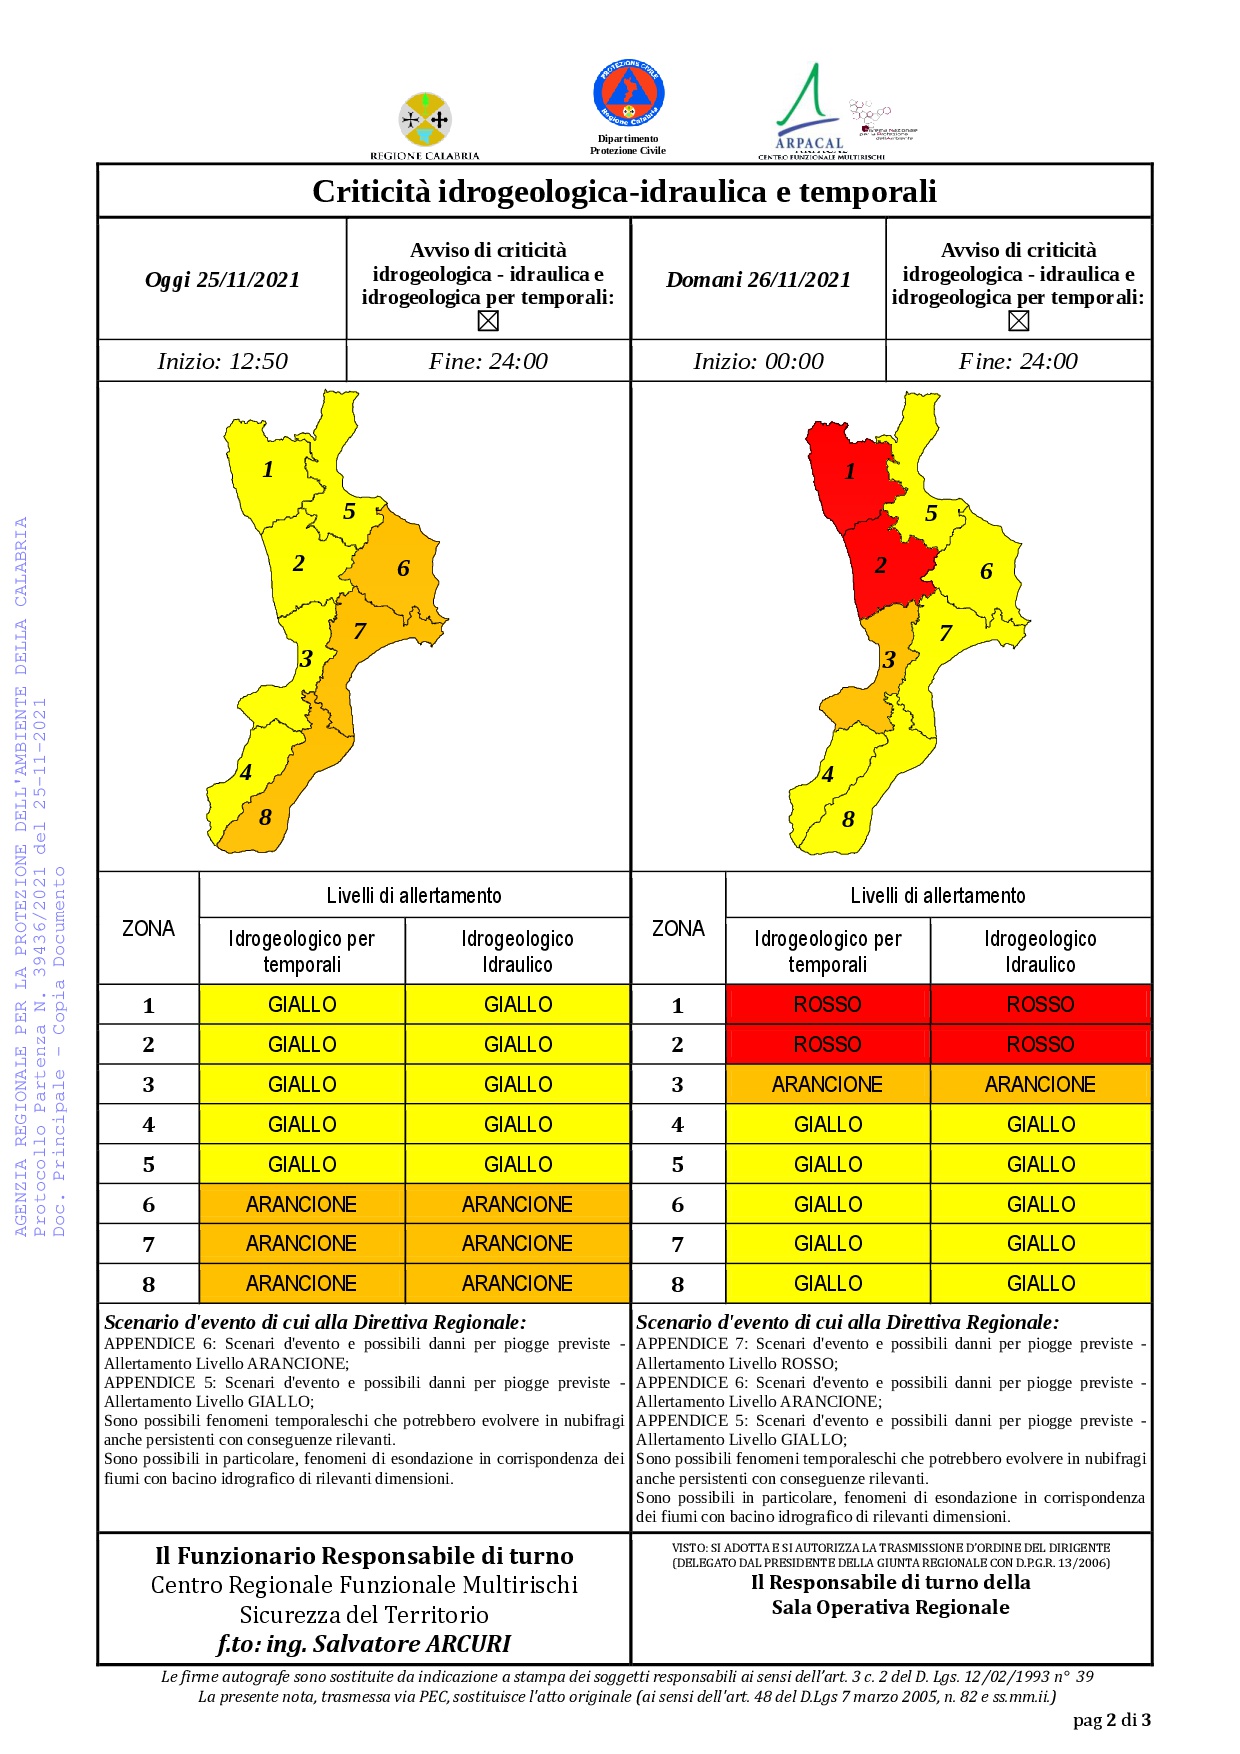 Criticità idrogeologica-idraulica e temporali in Calabria 25-11-2021